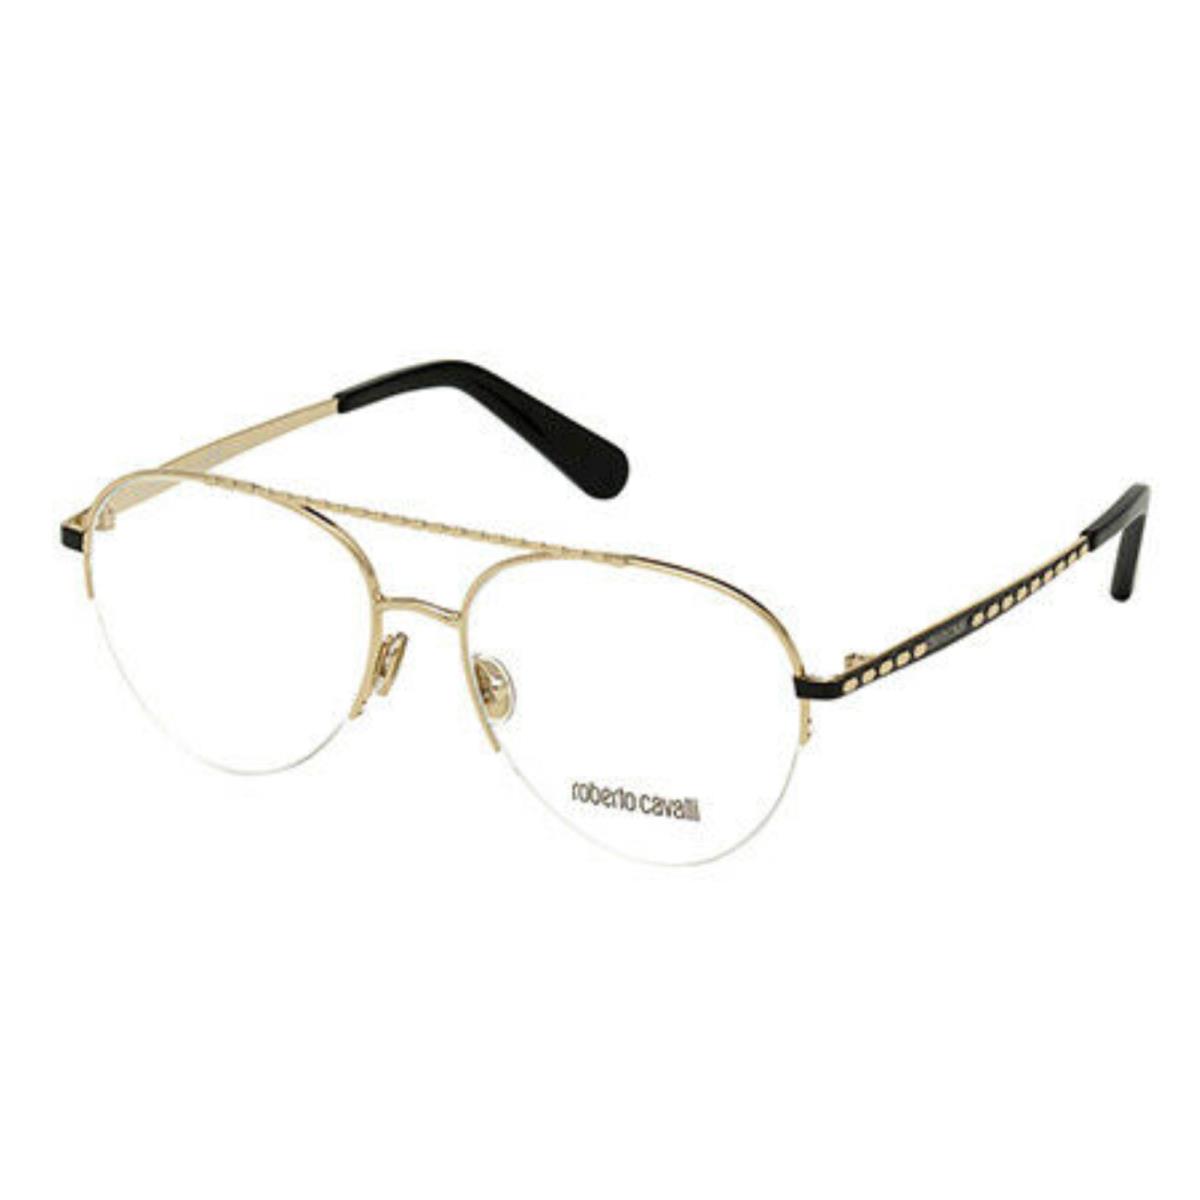 Roberto Cavalli Aviator Eyeglasses RC 5105 032 53-16 Gold Black Frames